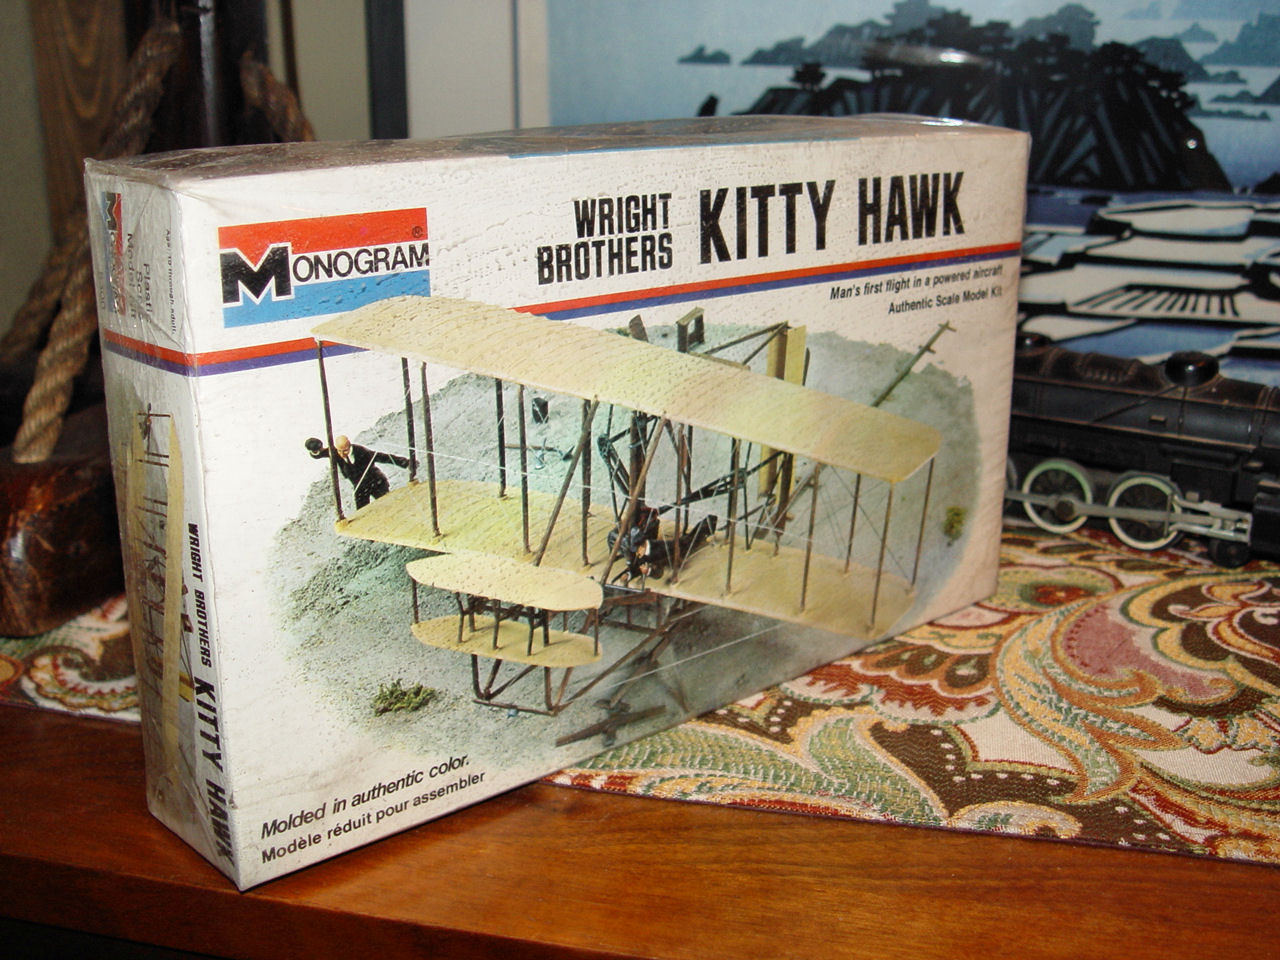 1973 Monogram 5300 Wright
                                        Brothers Kitty Hawk Model Kit